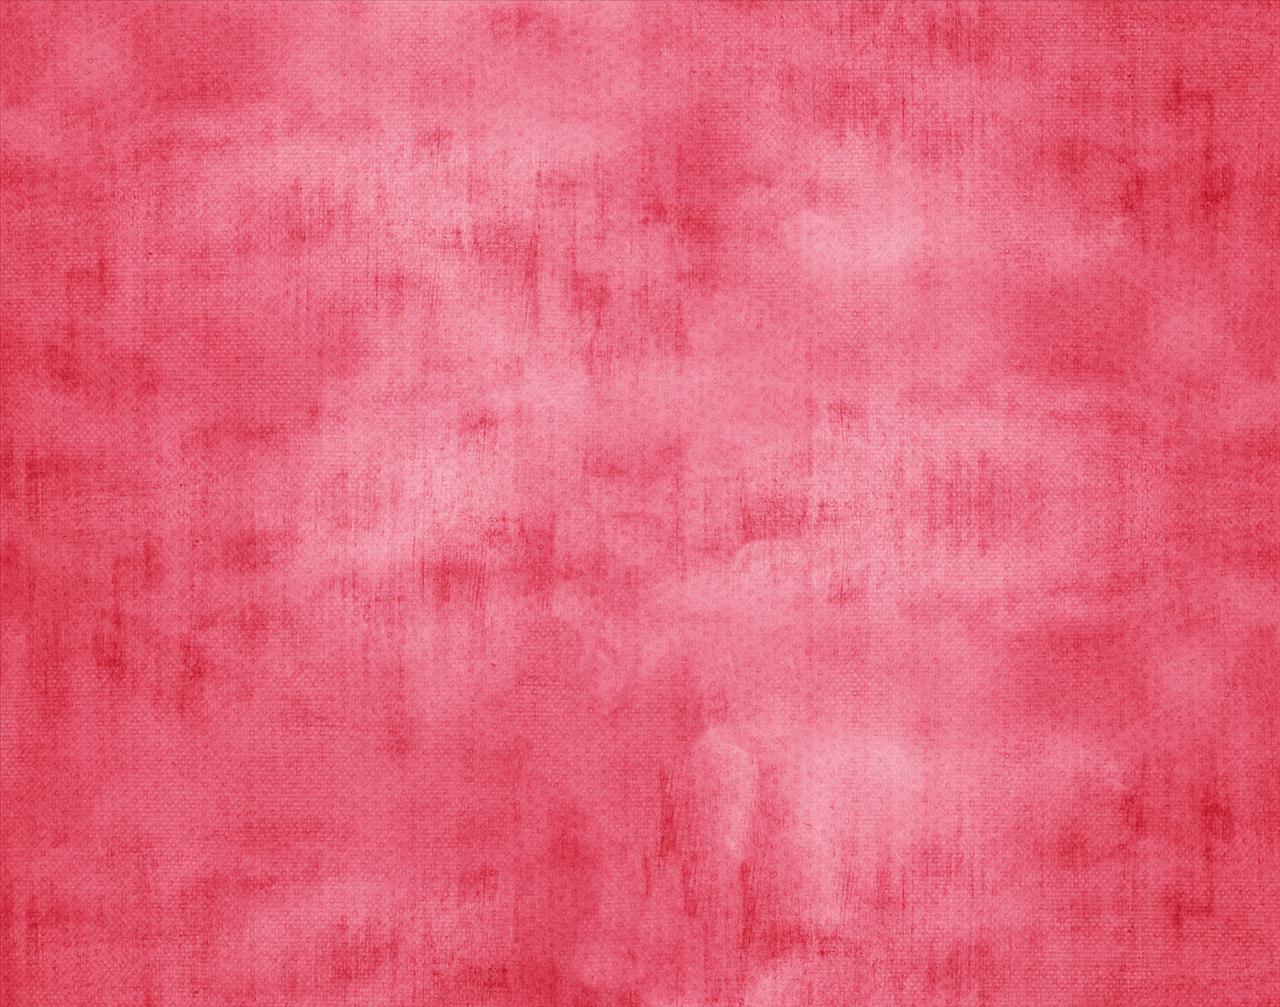 Plain Pink Background Mobile Wallpaper